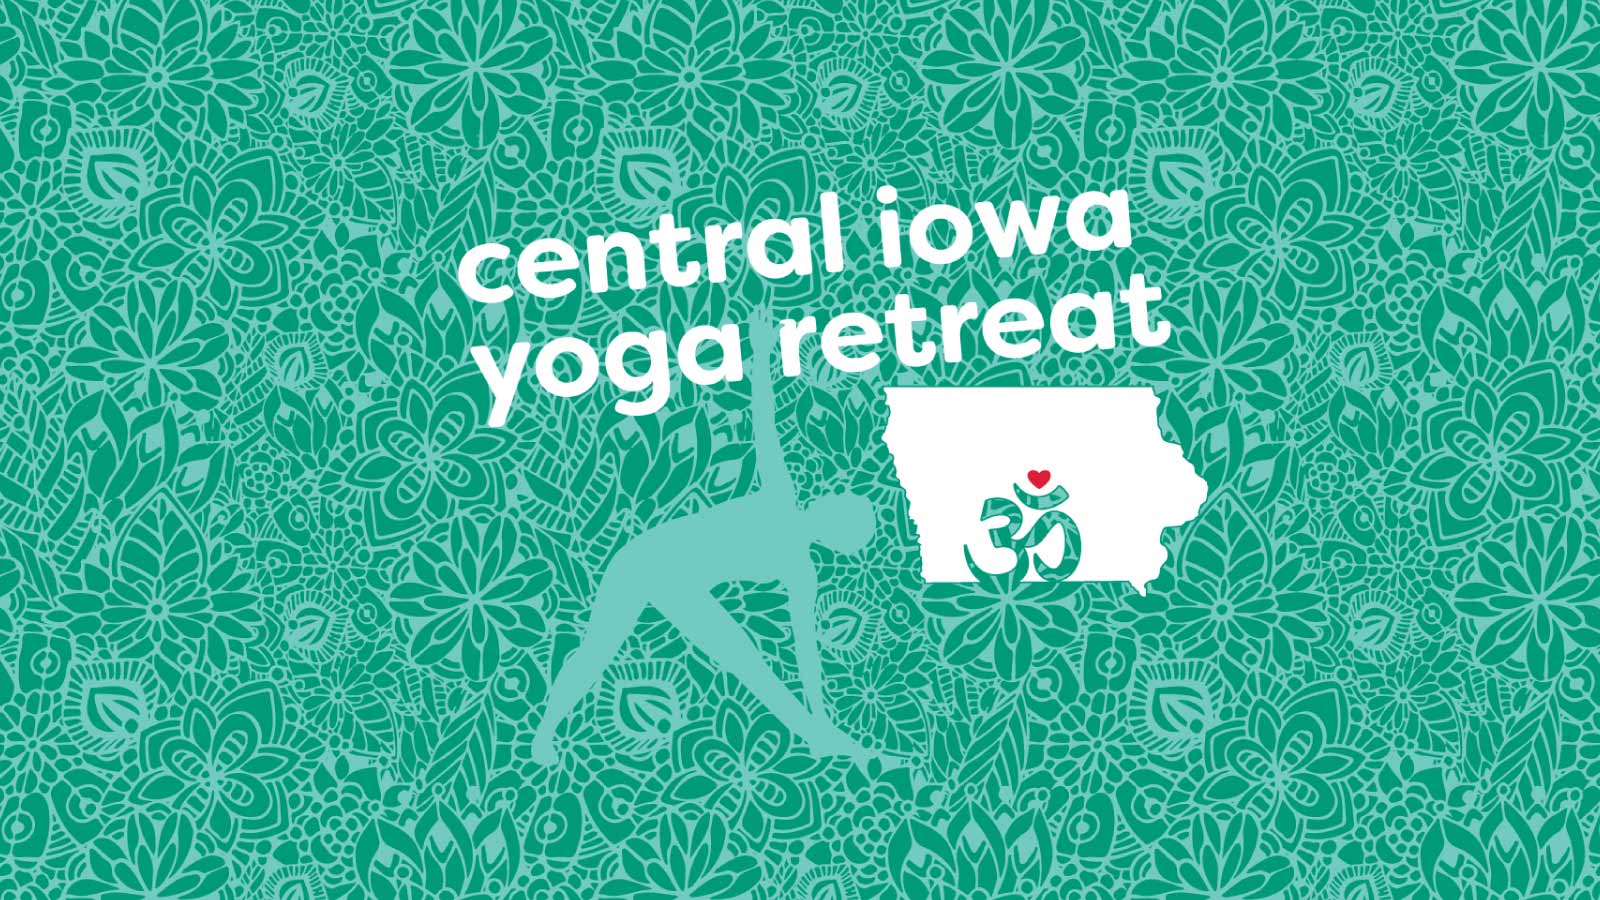 Central Iowa Yoga Retreat banner